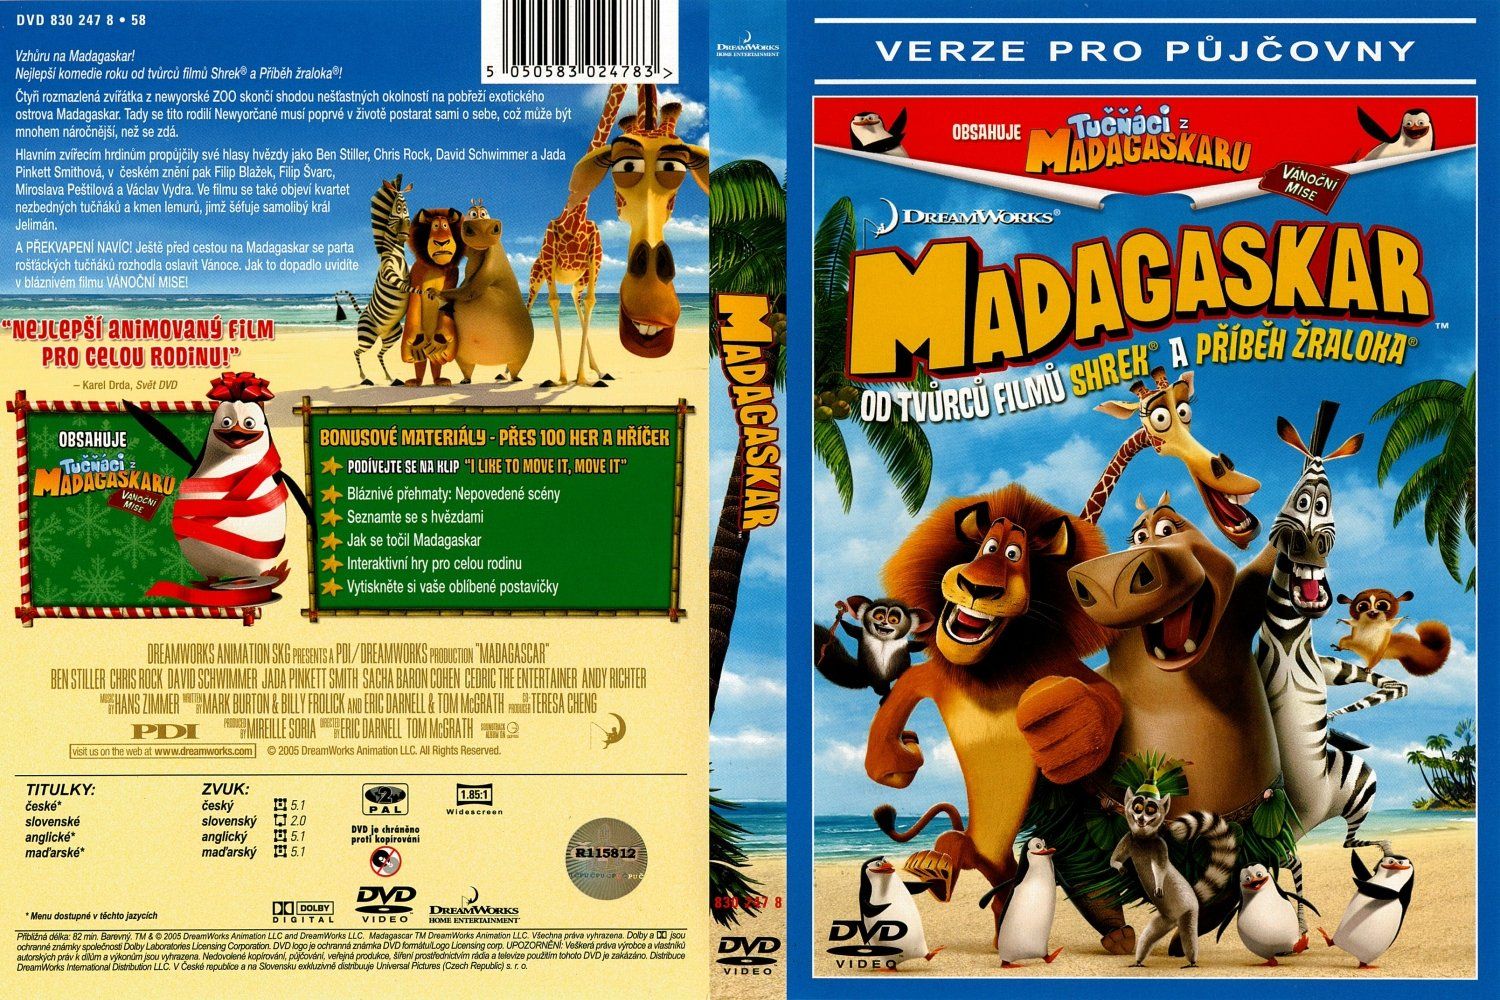 Madagascar Dvd Cz Dvd Covers Cover Century Over 500 000 Album Art Covers For Free